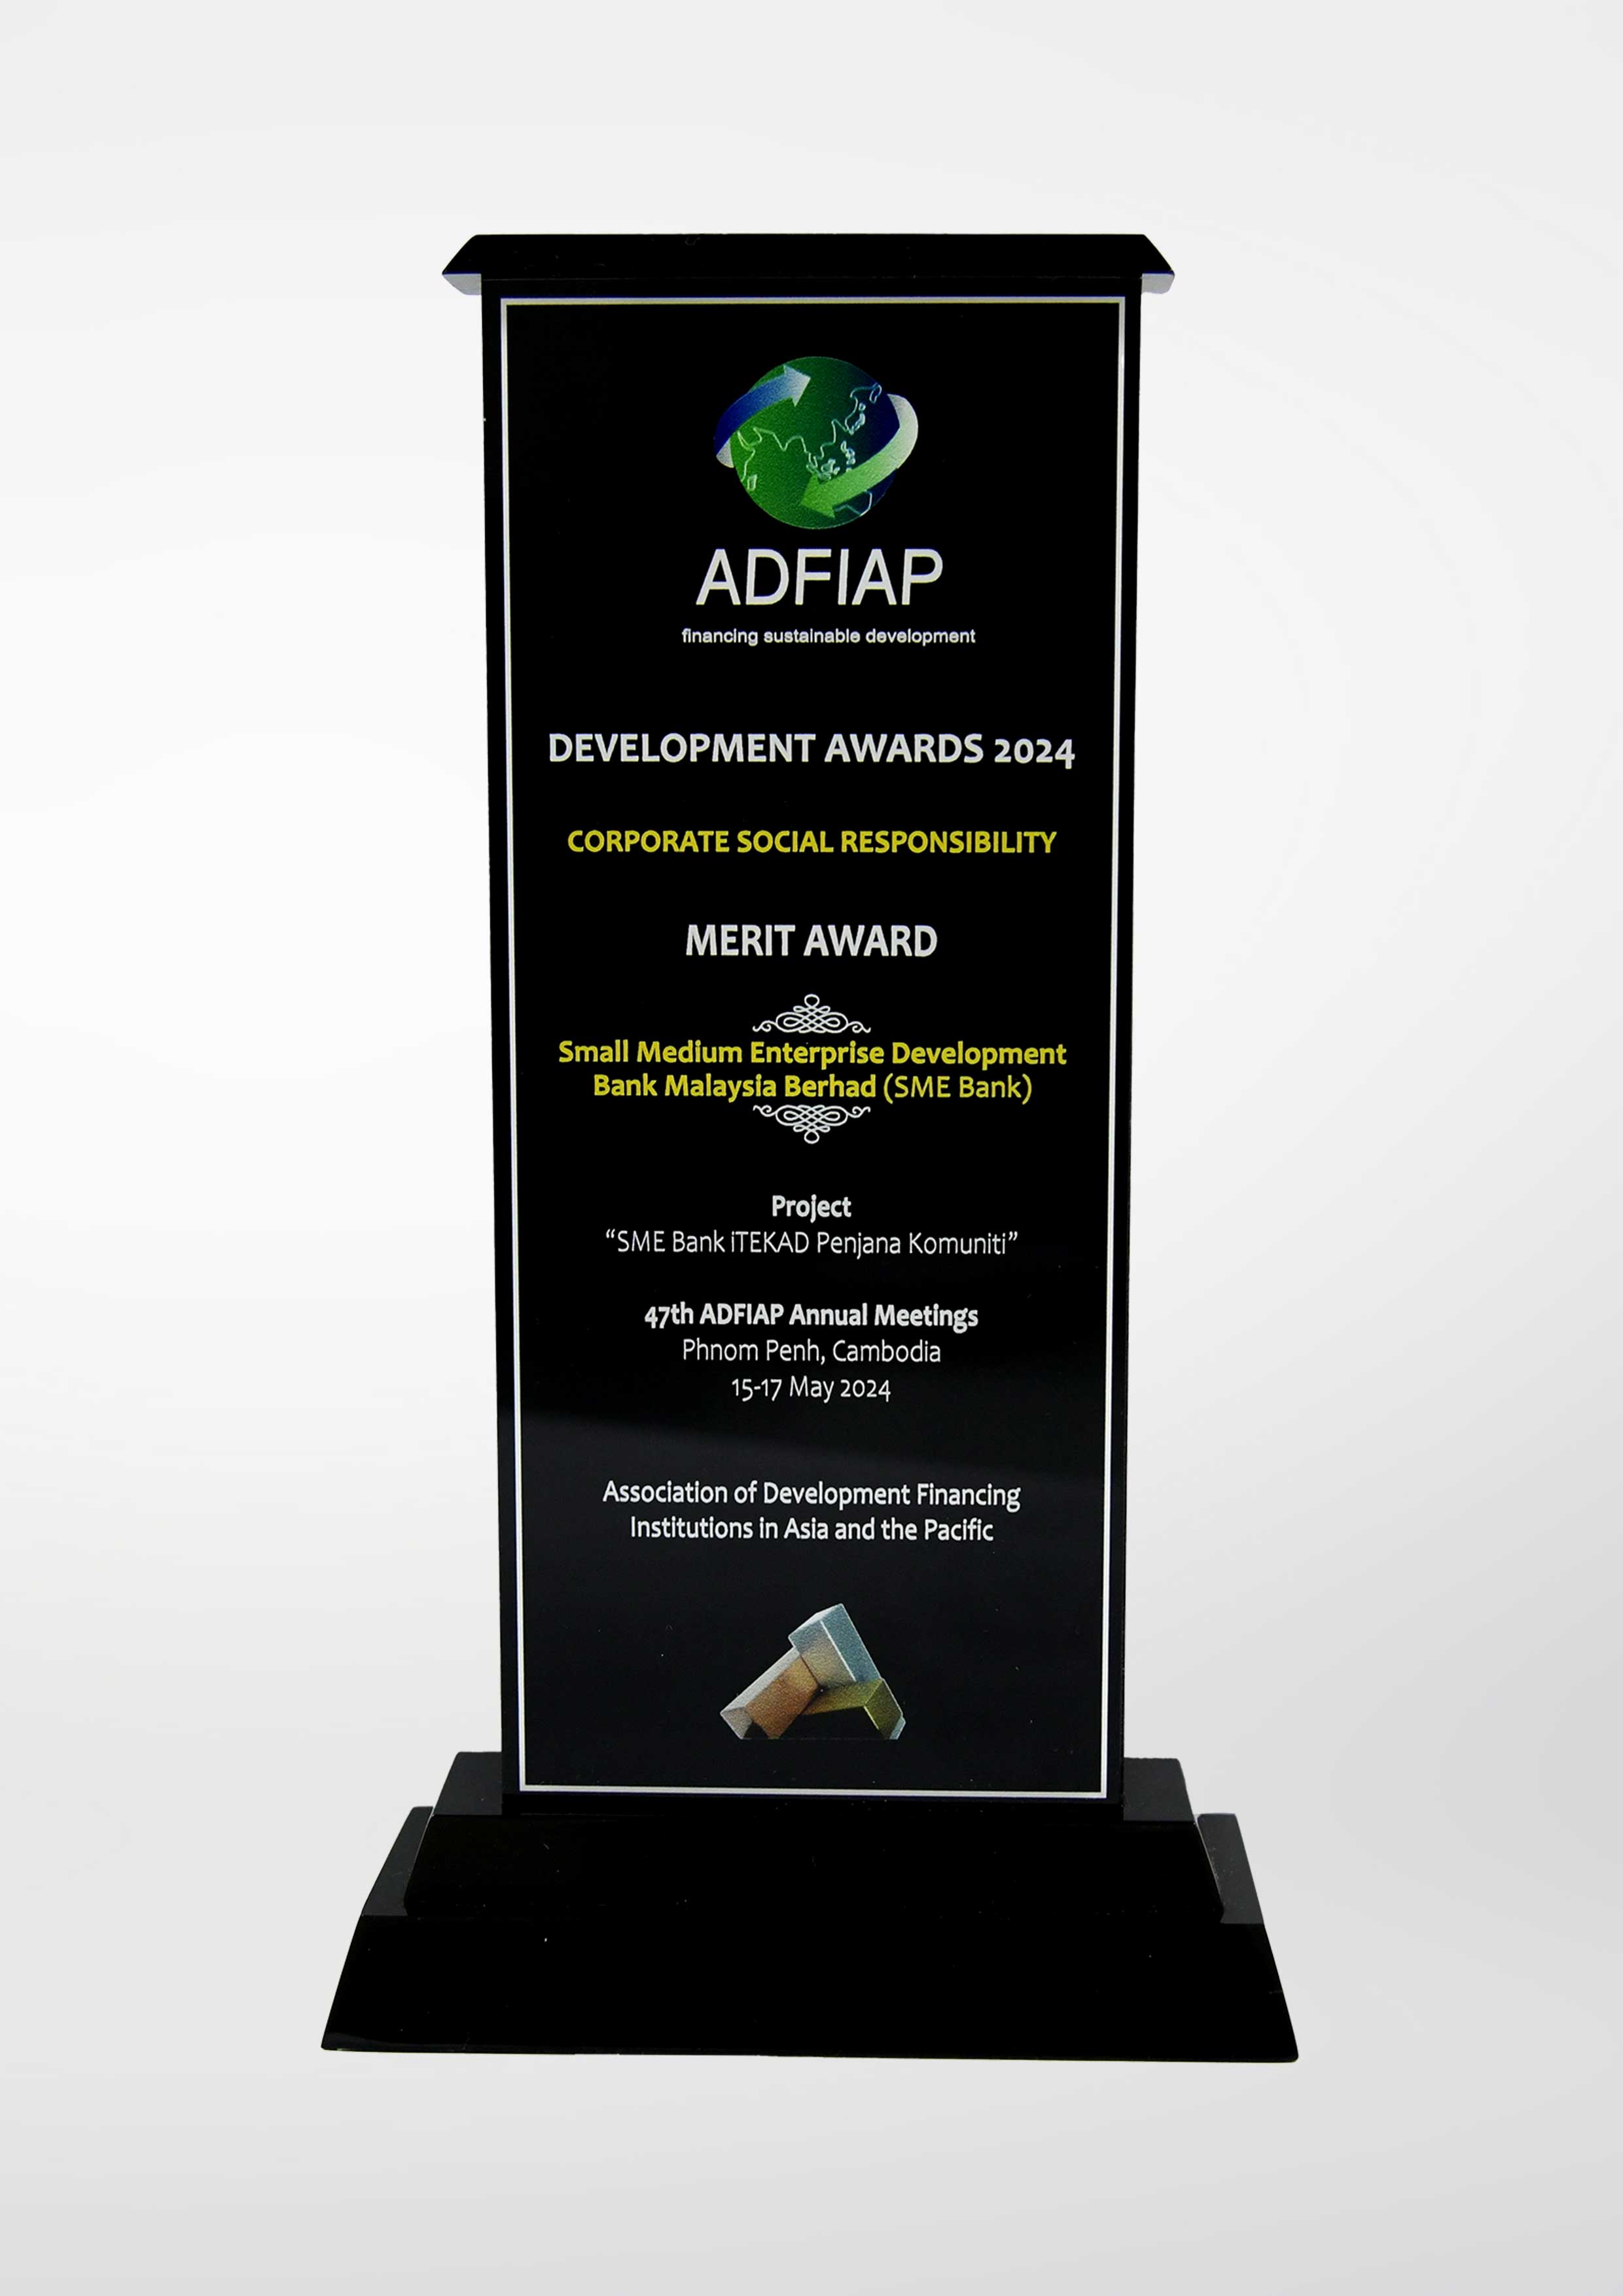 ADFIAP Awards 2024 - Corporate Social Responsibility Category